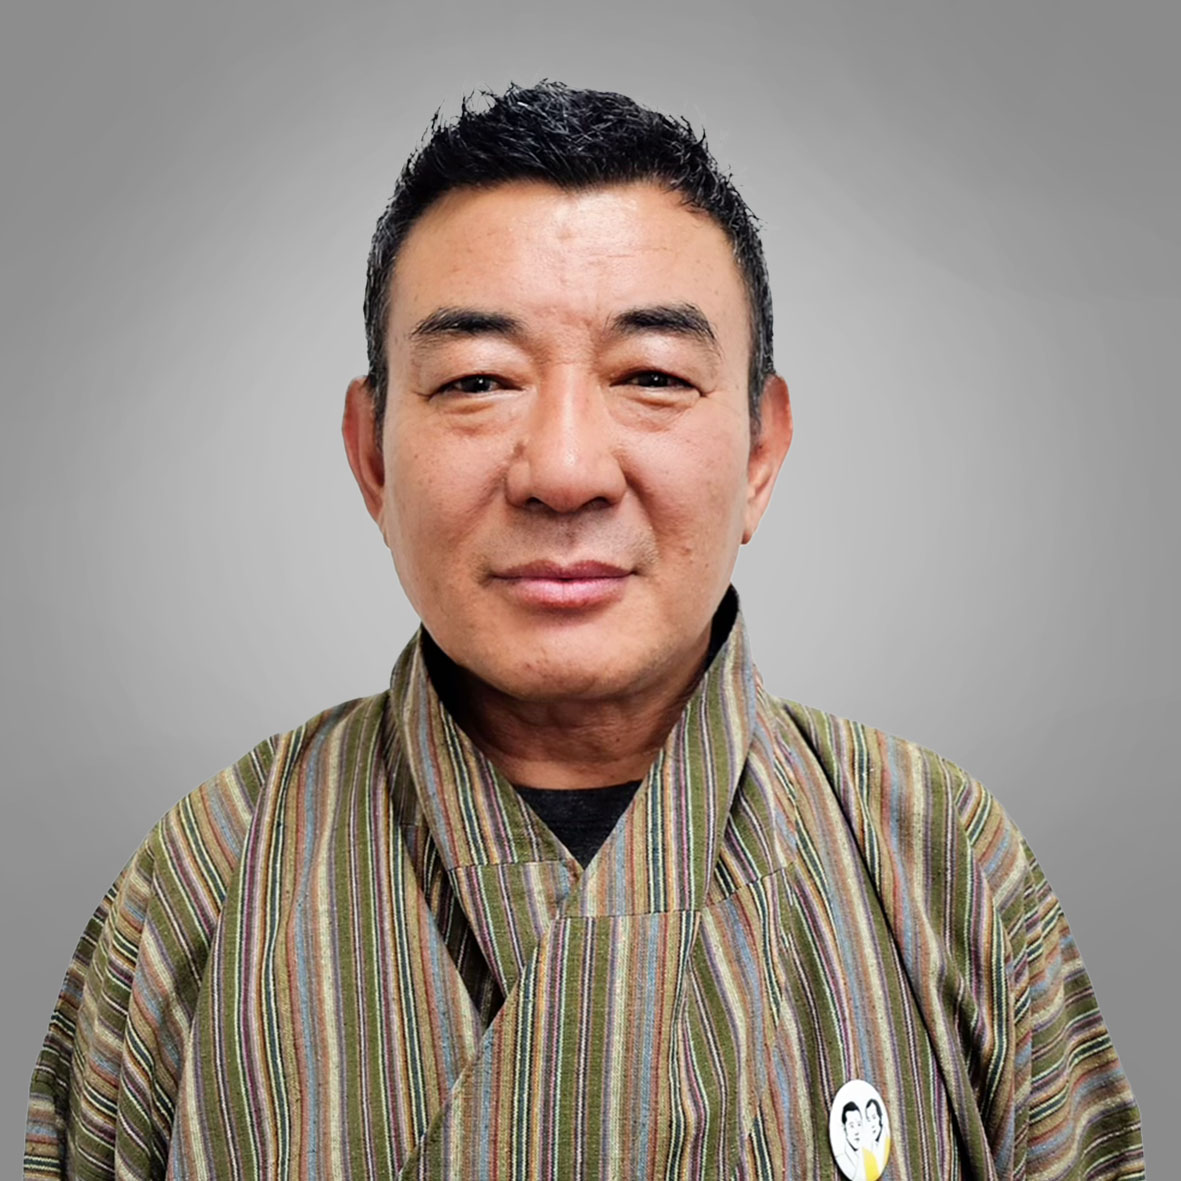 Mr.Pasang-Dorji